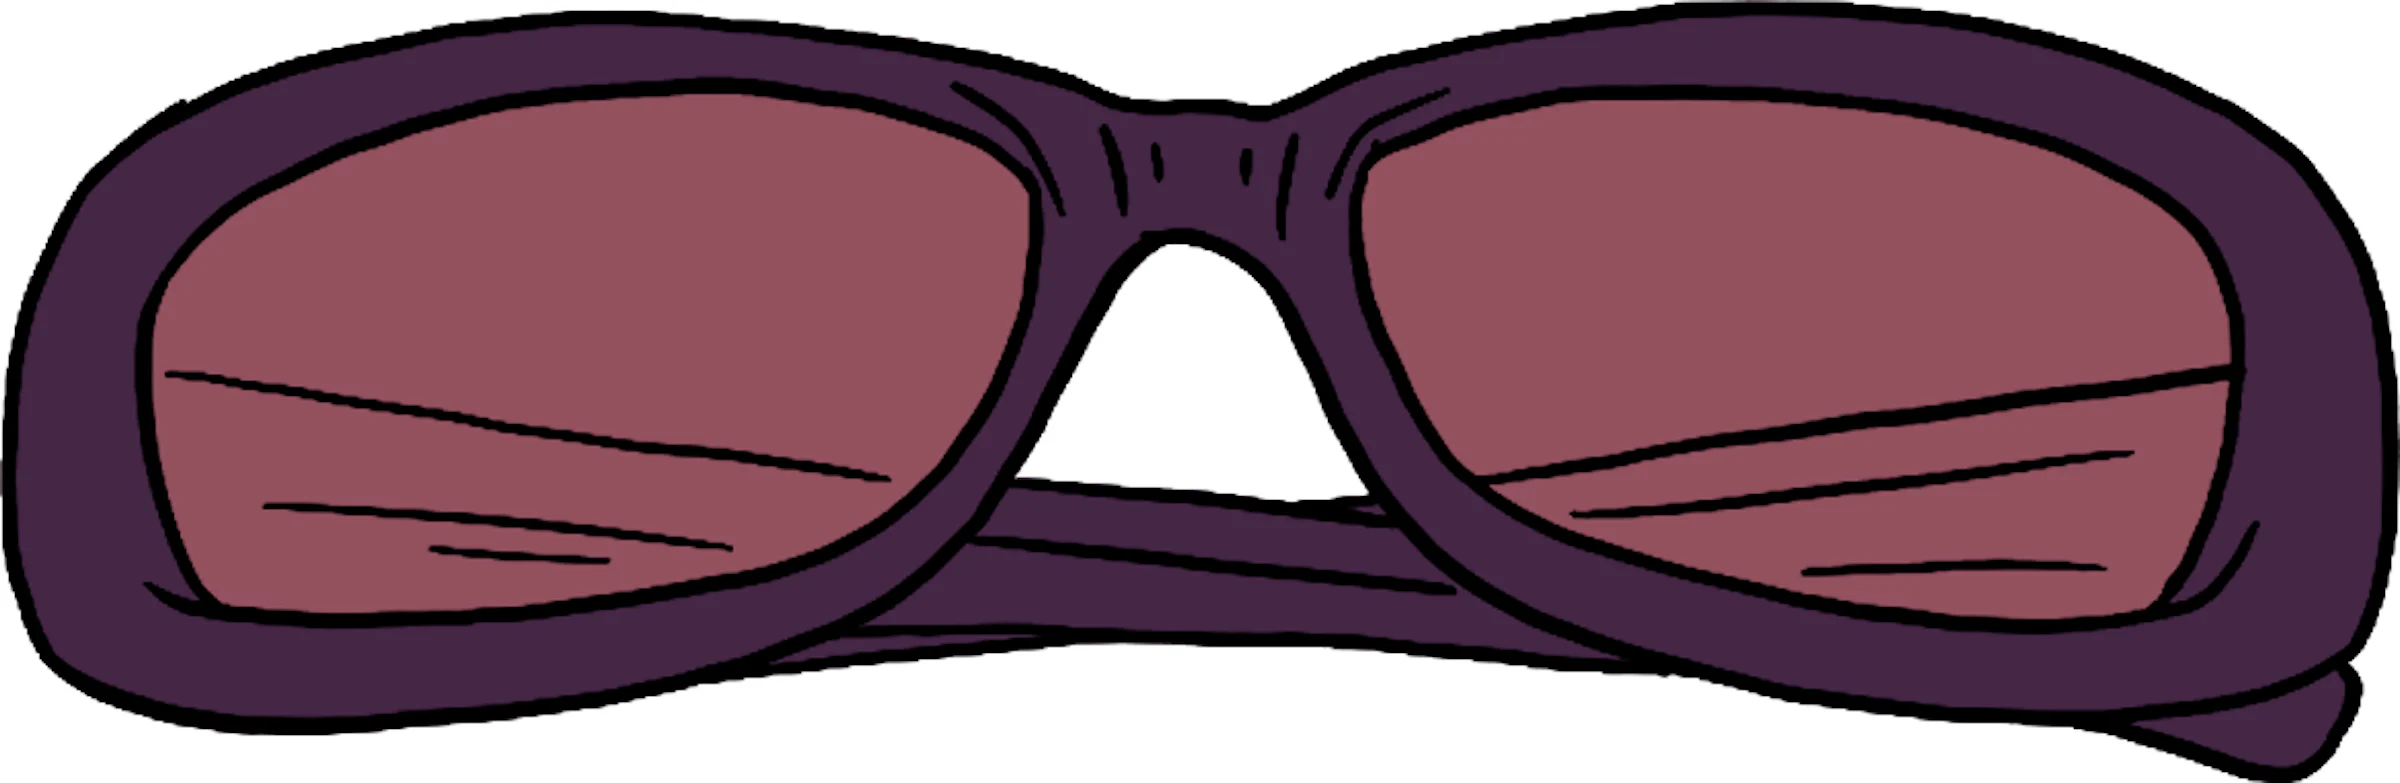 Supreme Stretch Sunglasses Iridescent Purple